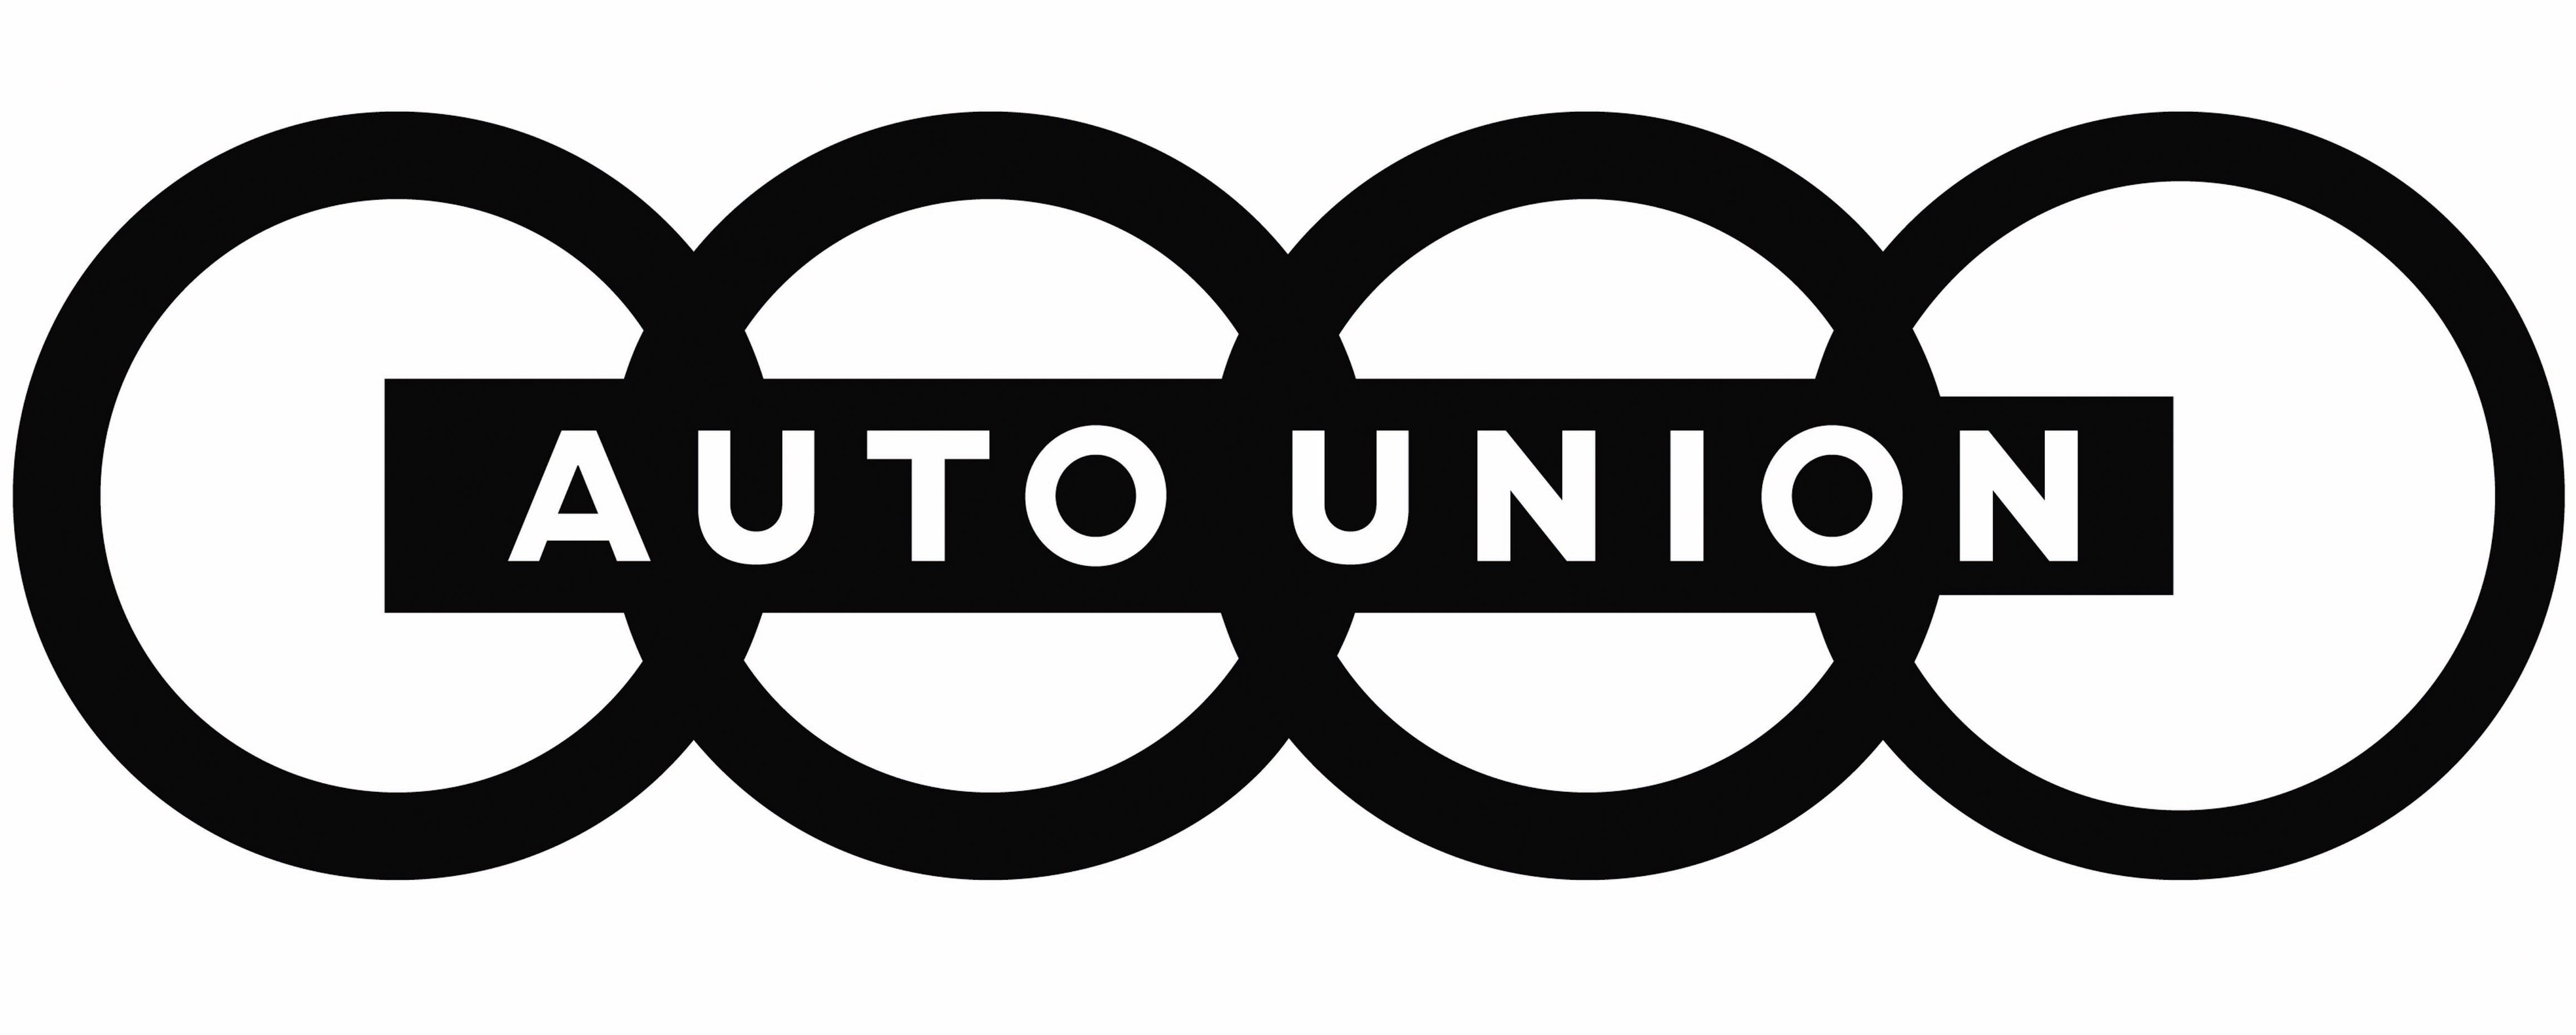 auto-union_logo_32.jpg